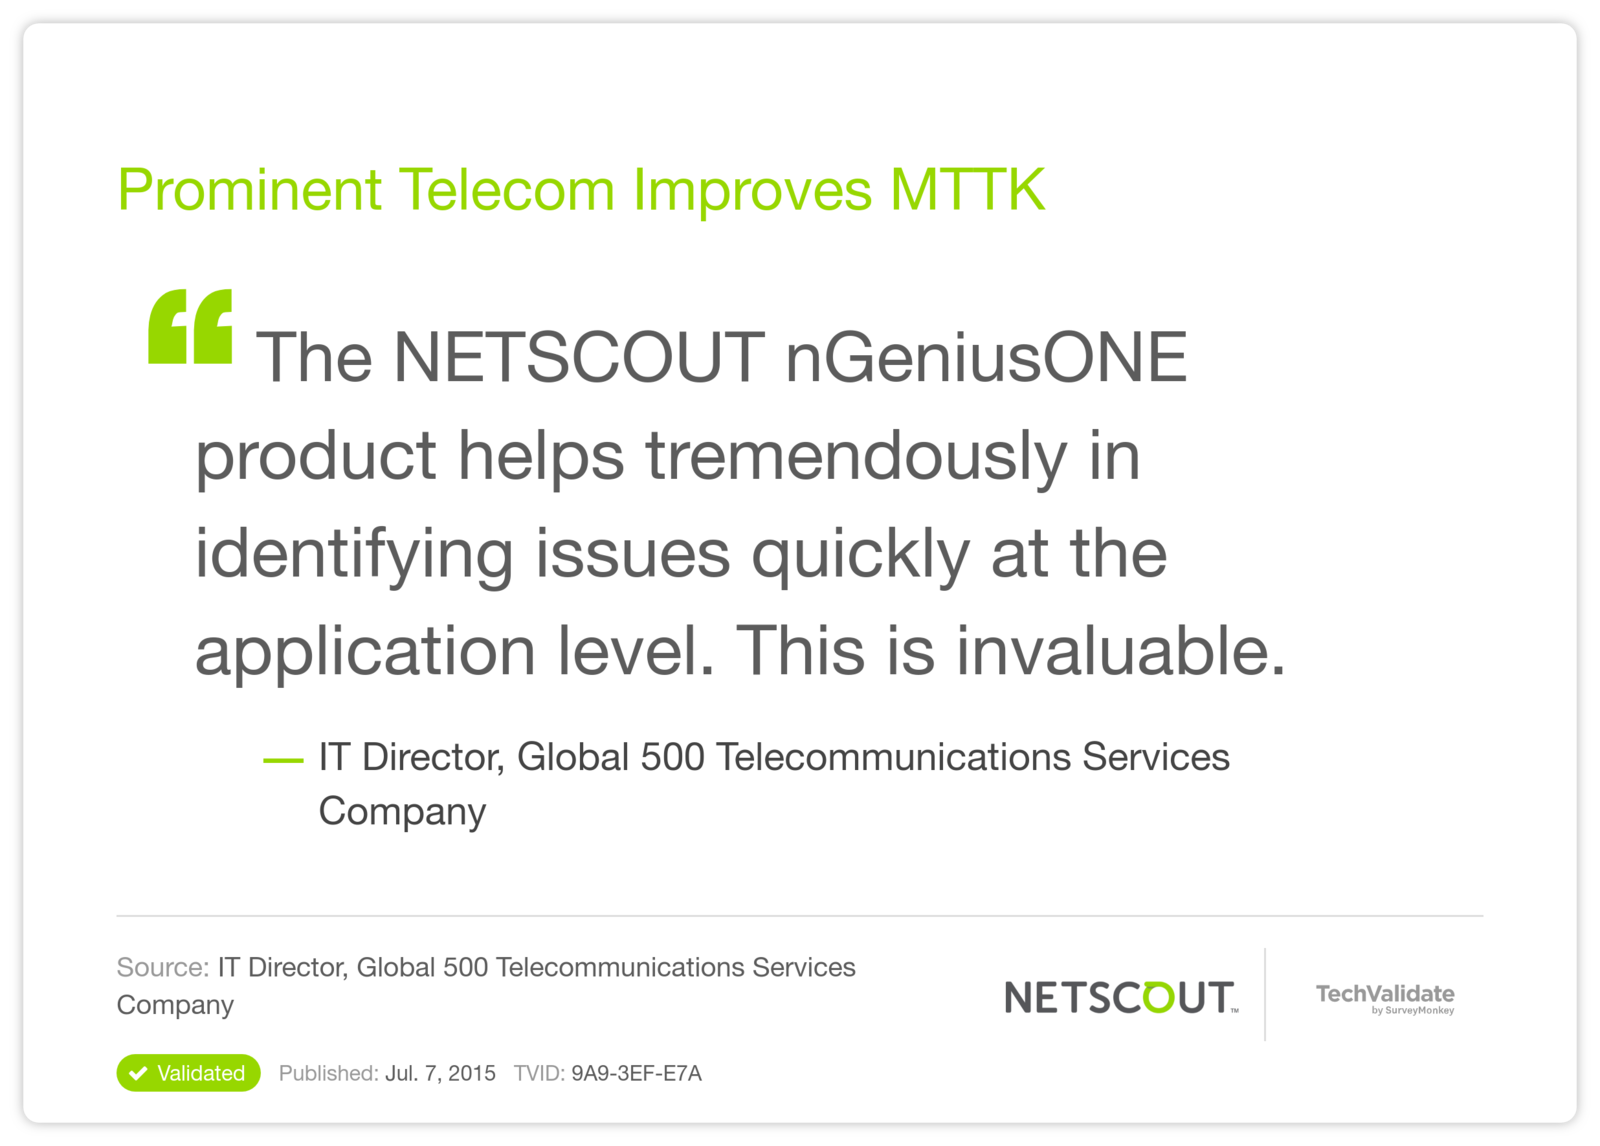 Prominent Telecom Improves MTTK